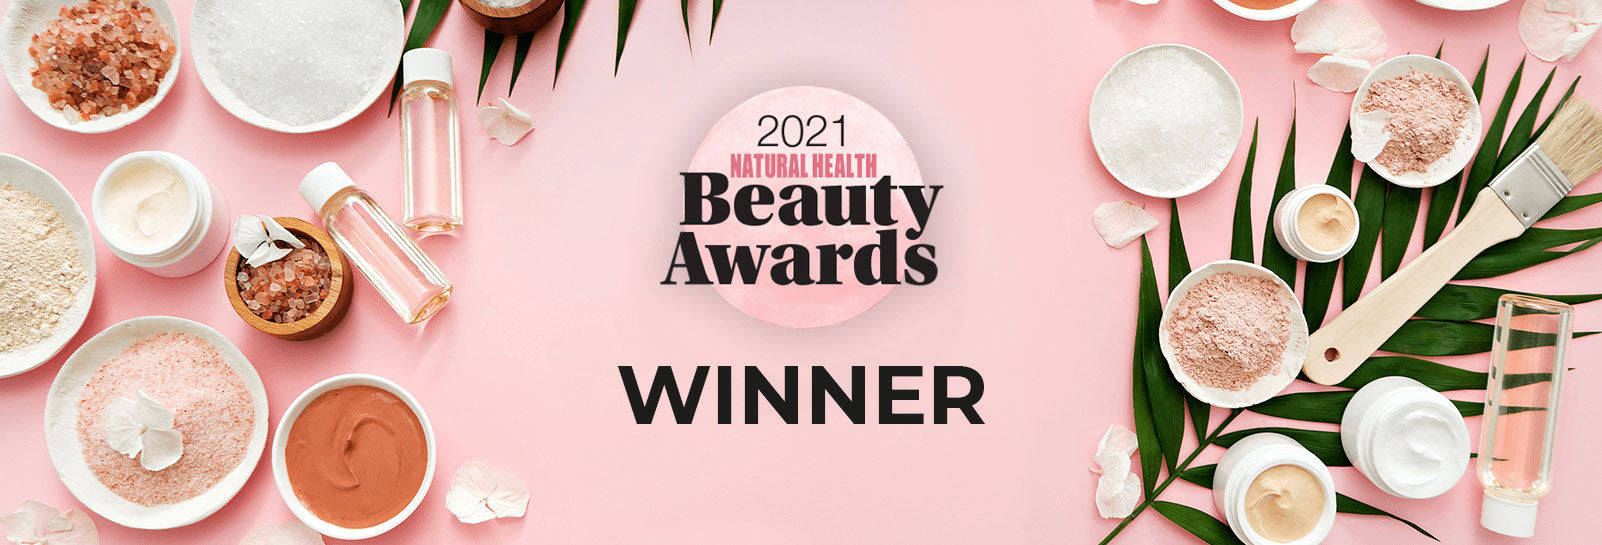 Natural Health Beauty Awards Winners